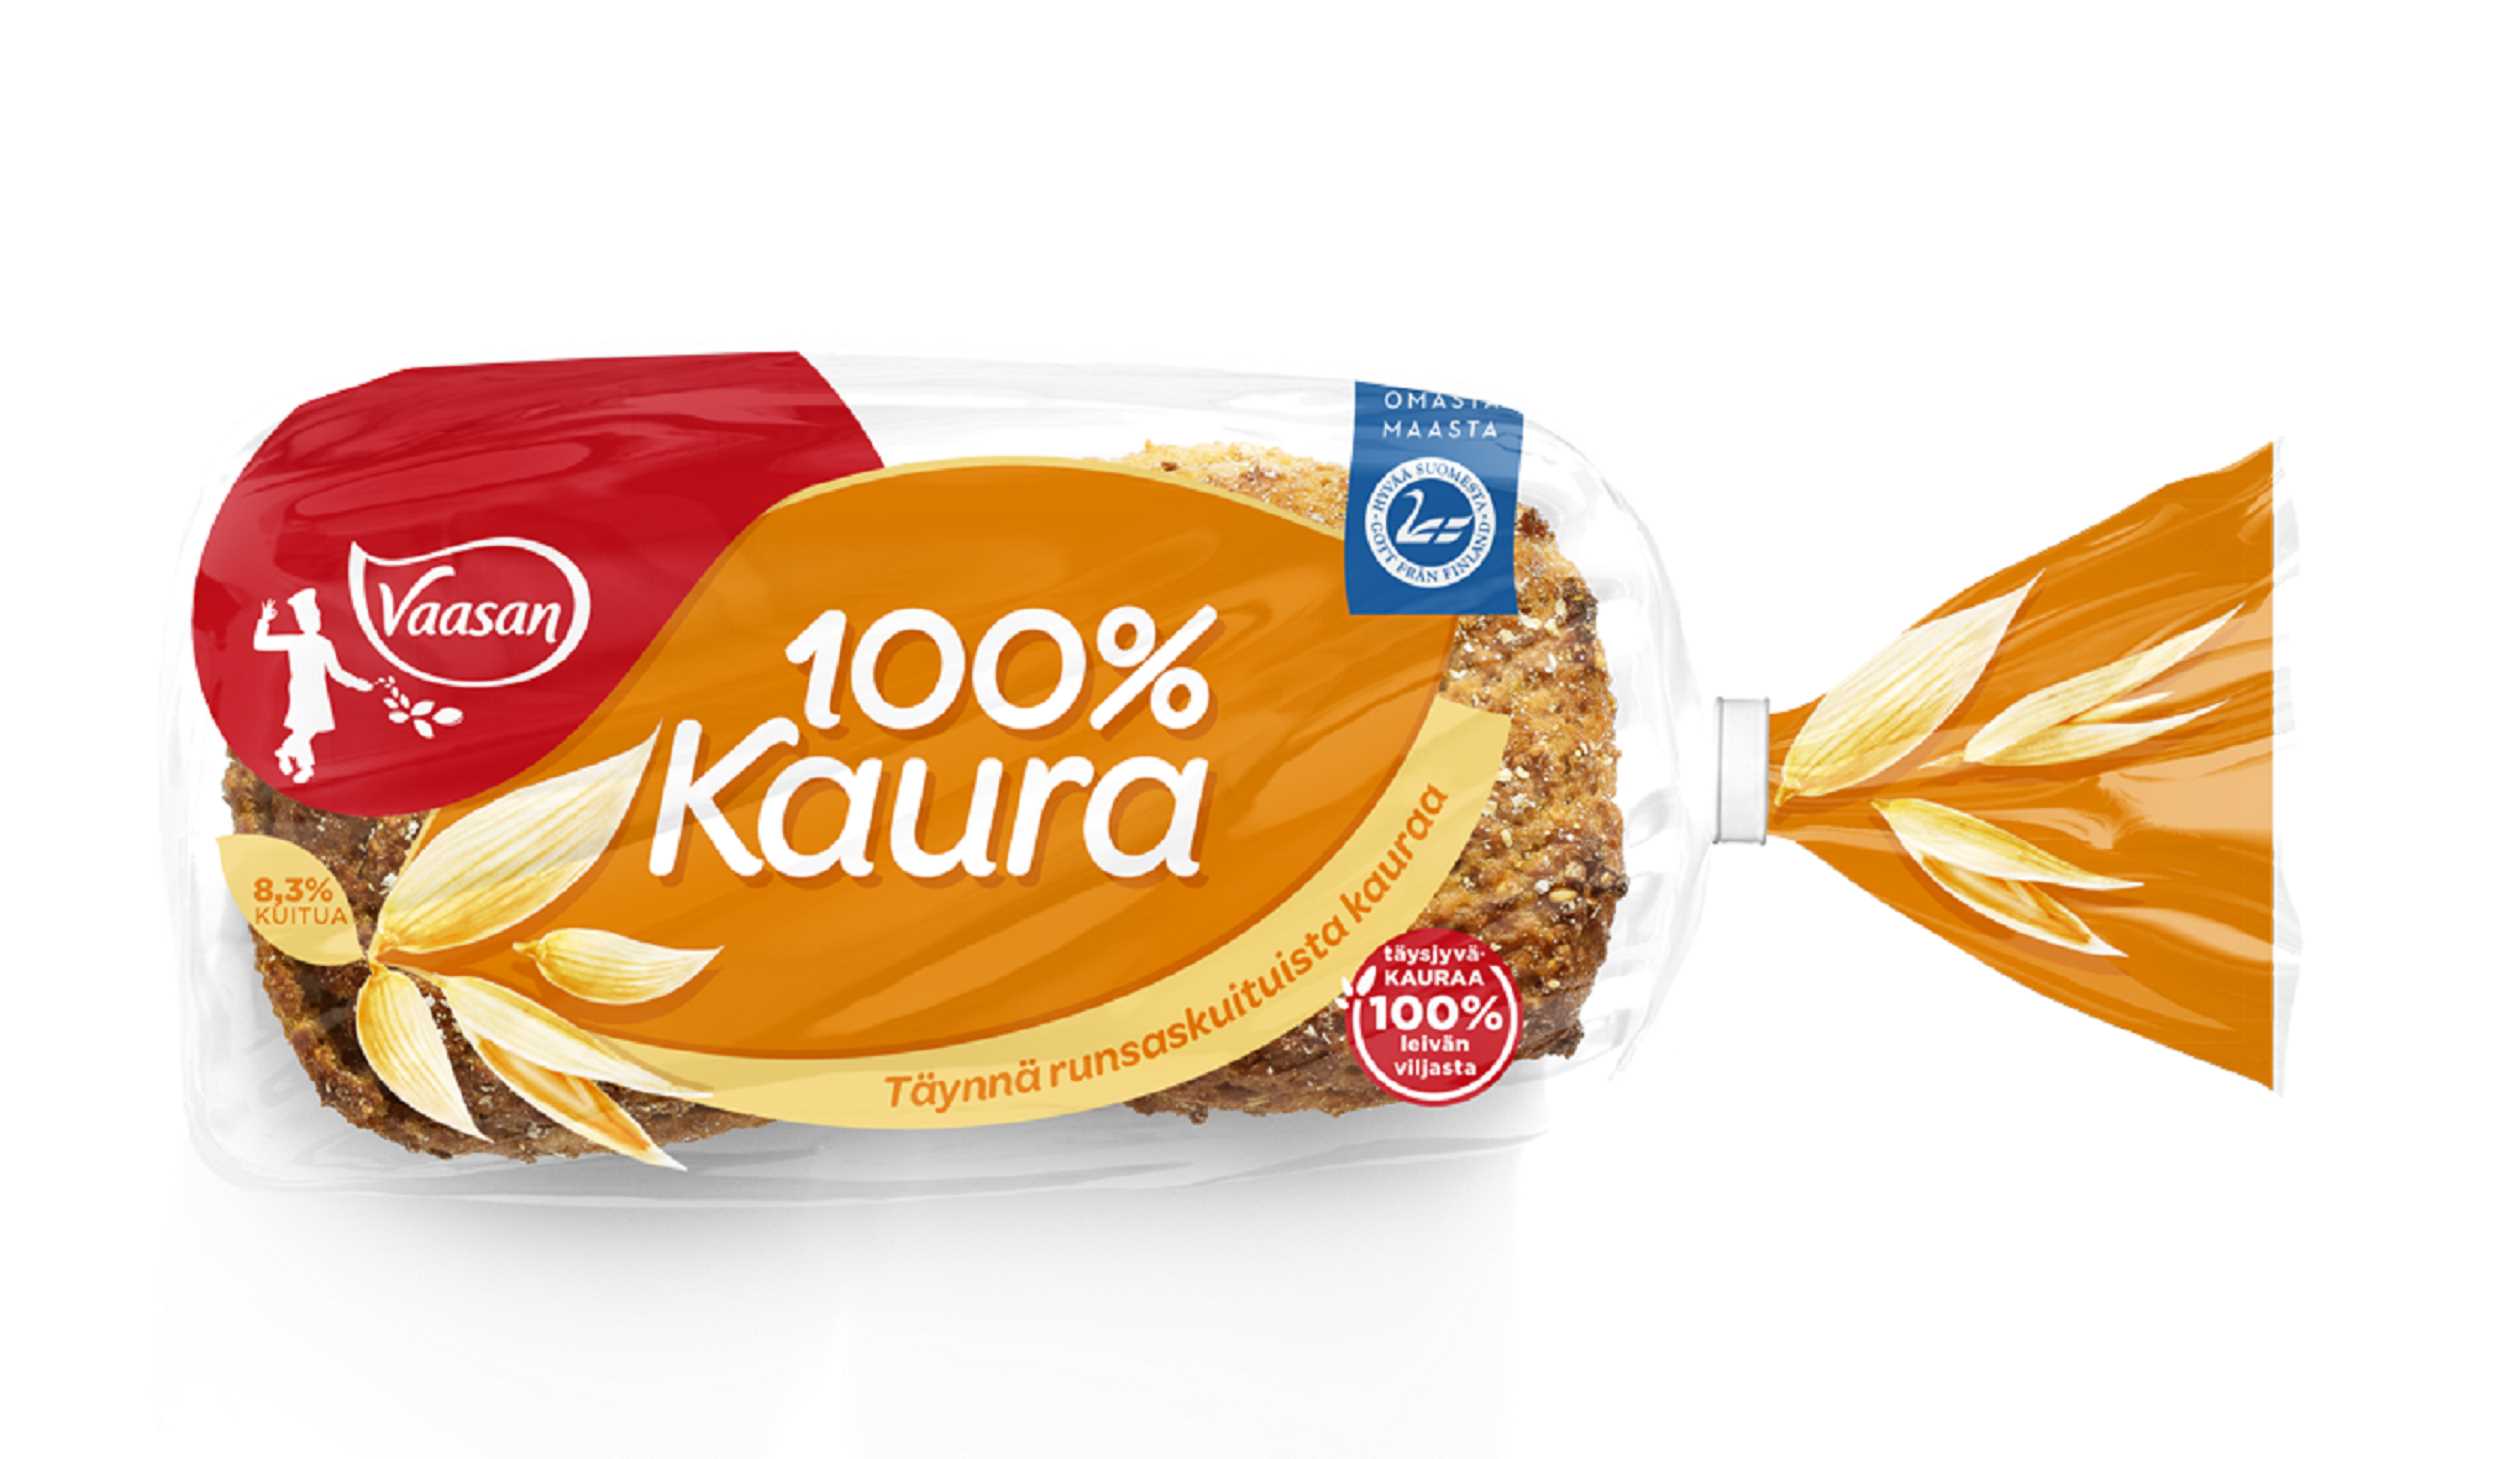 Vaasan 100 % Kaura 400g/ 6 pcs White bread – 